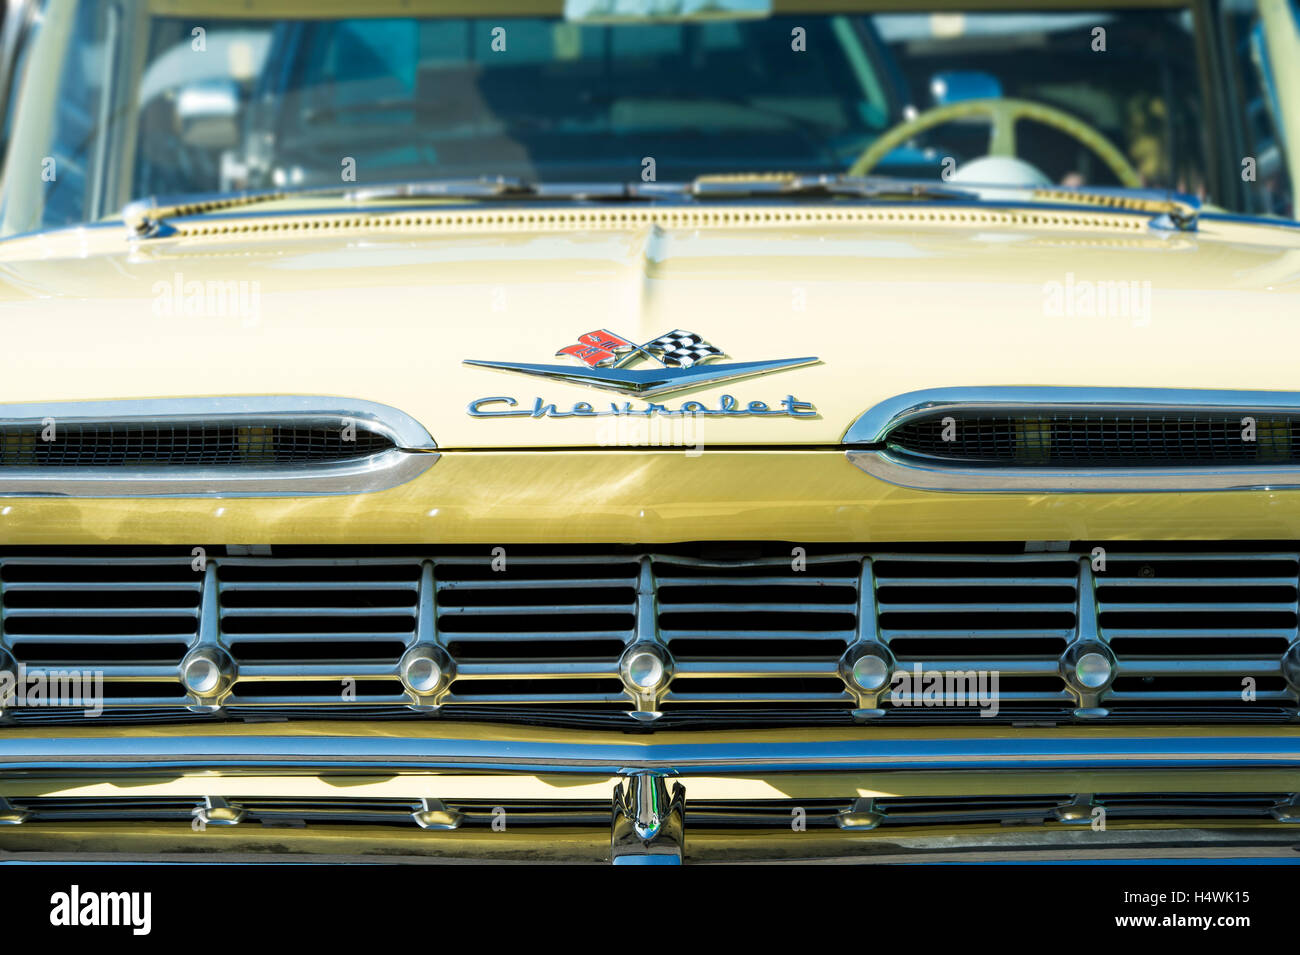 1959 Chevrolet El Camino. Classic American car. Abstract Stock Photo